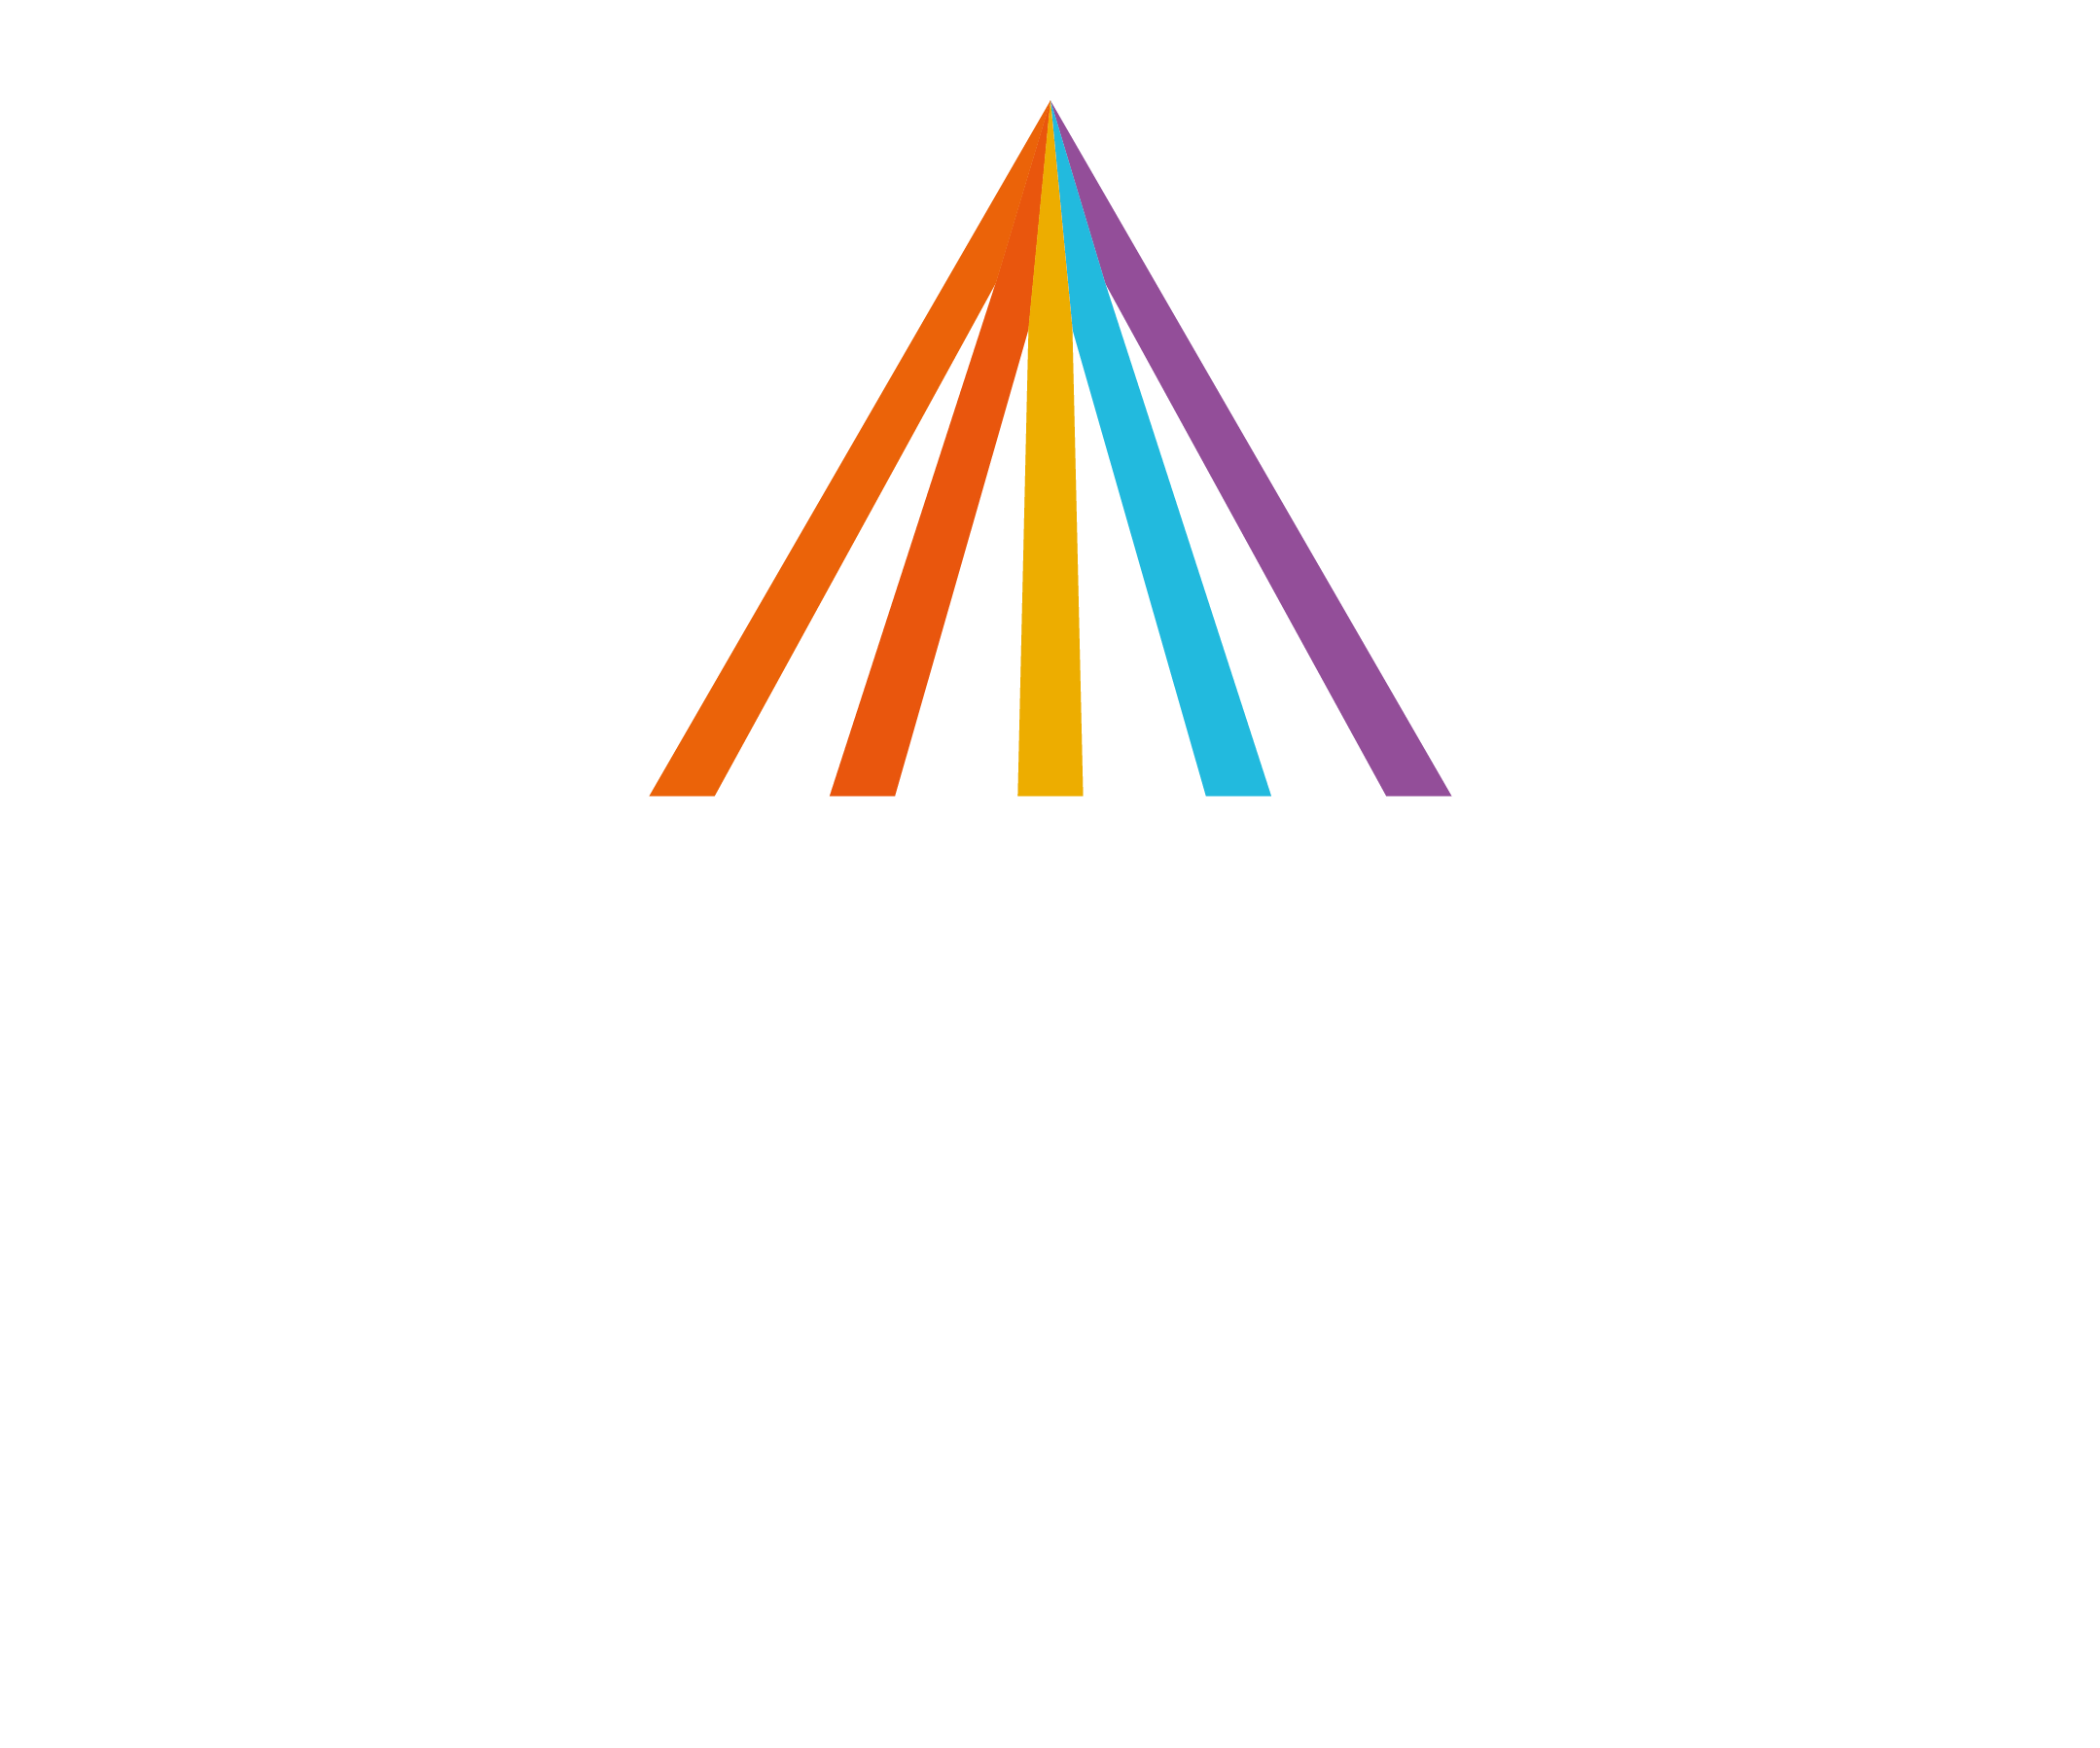 The Amelia